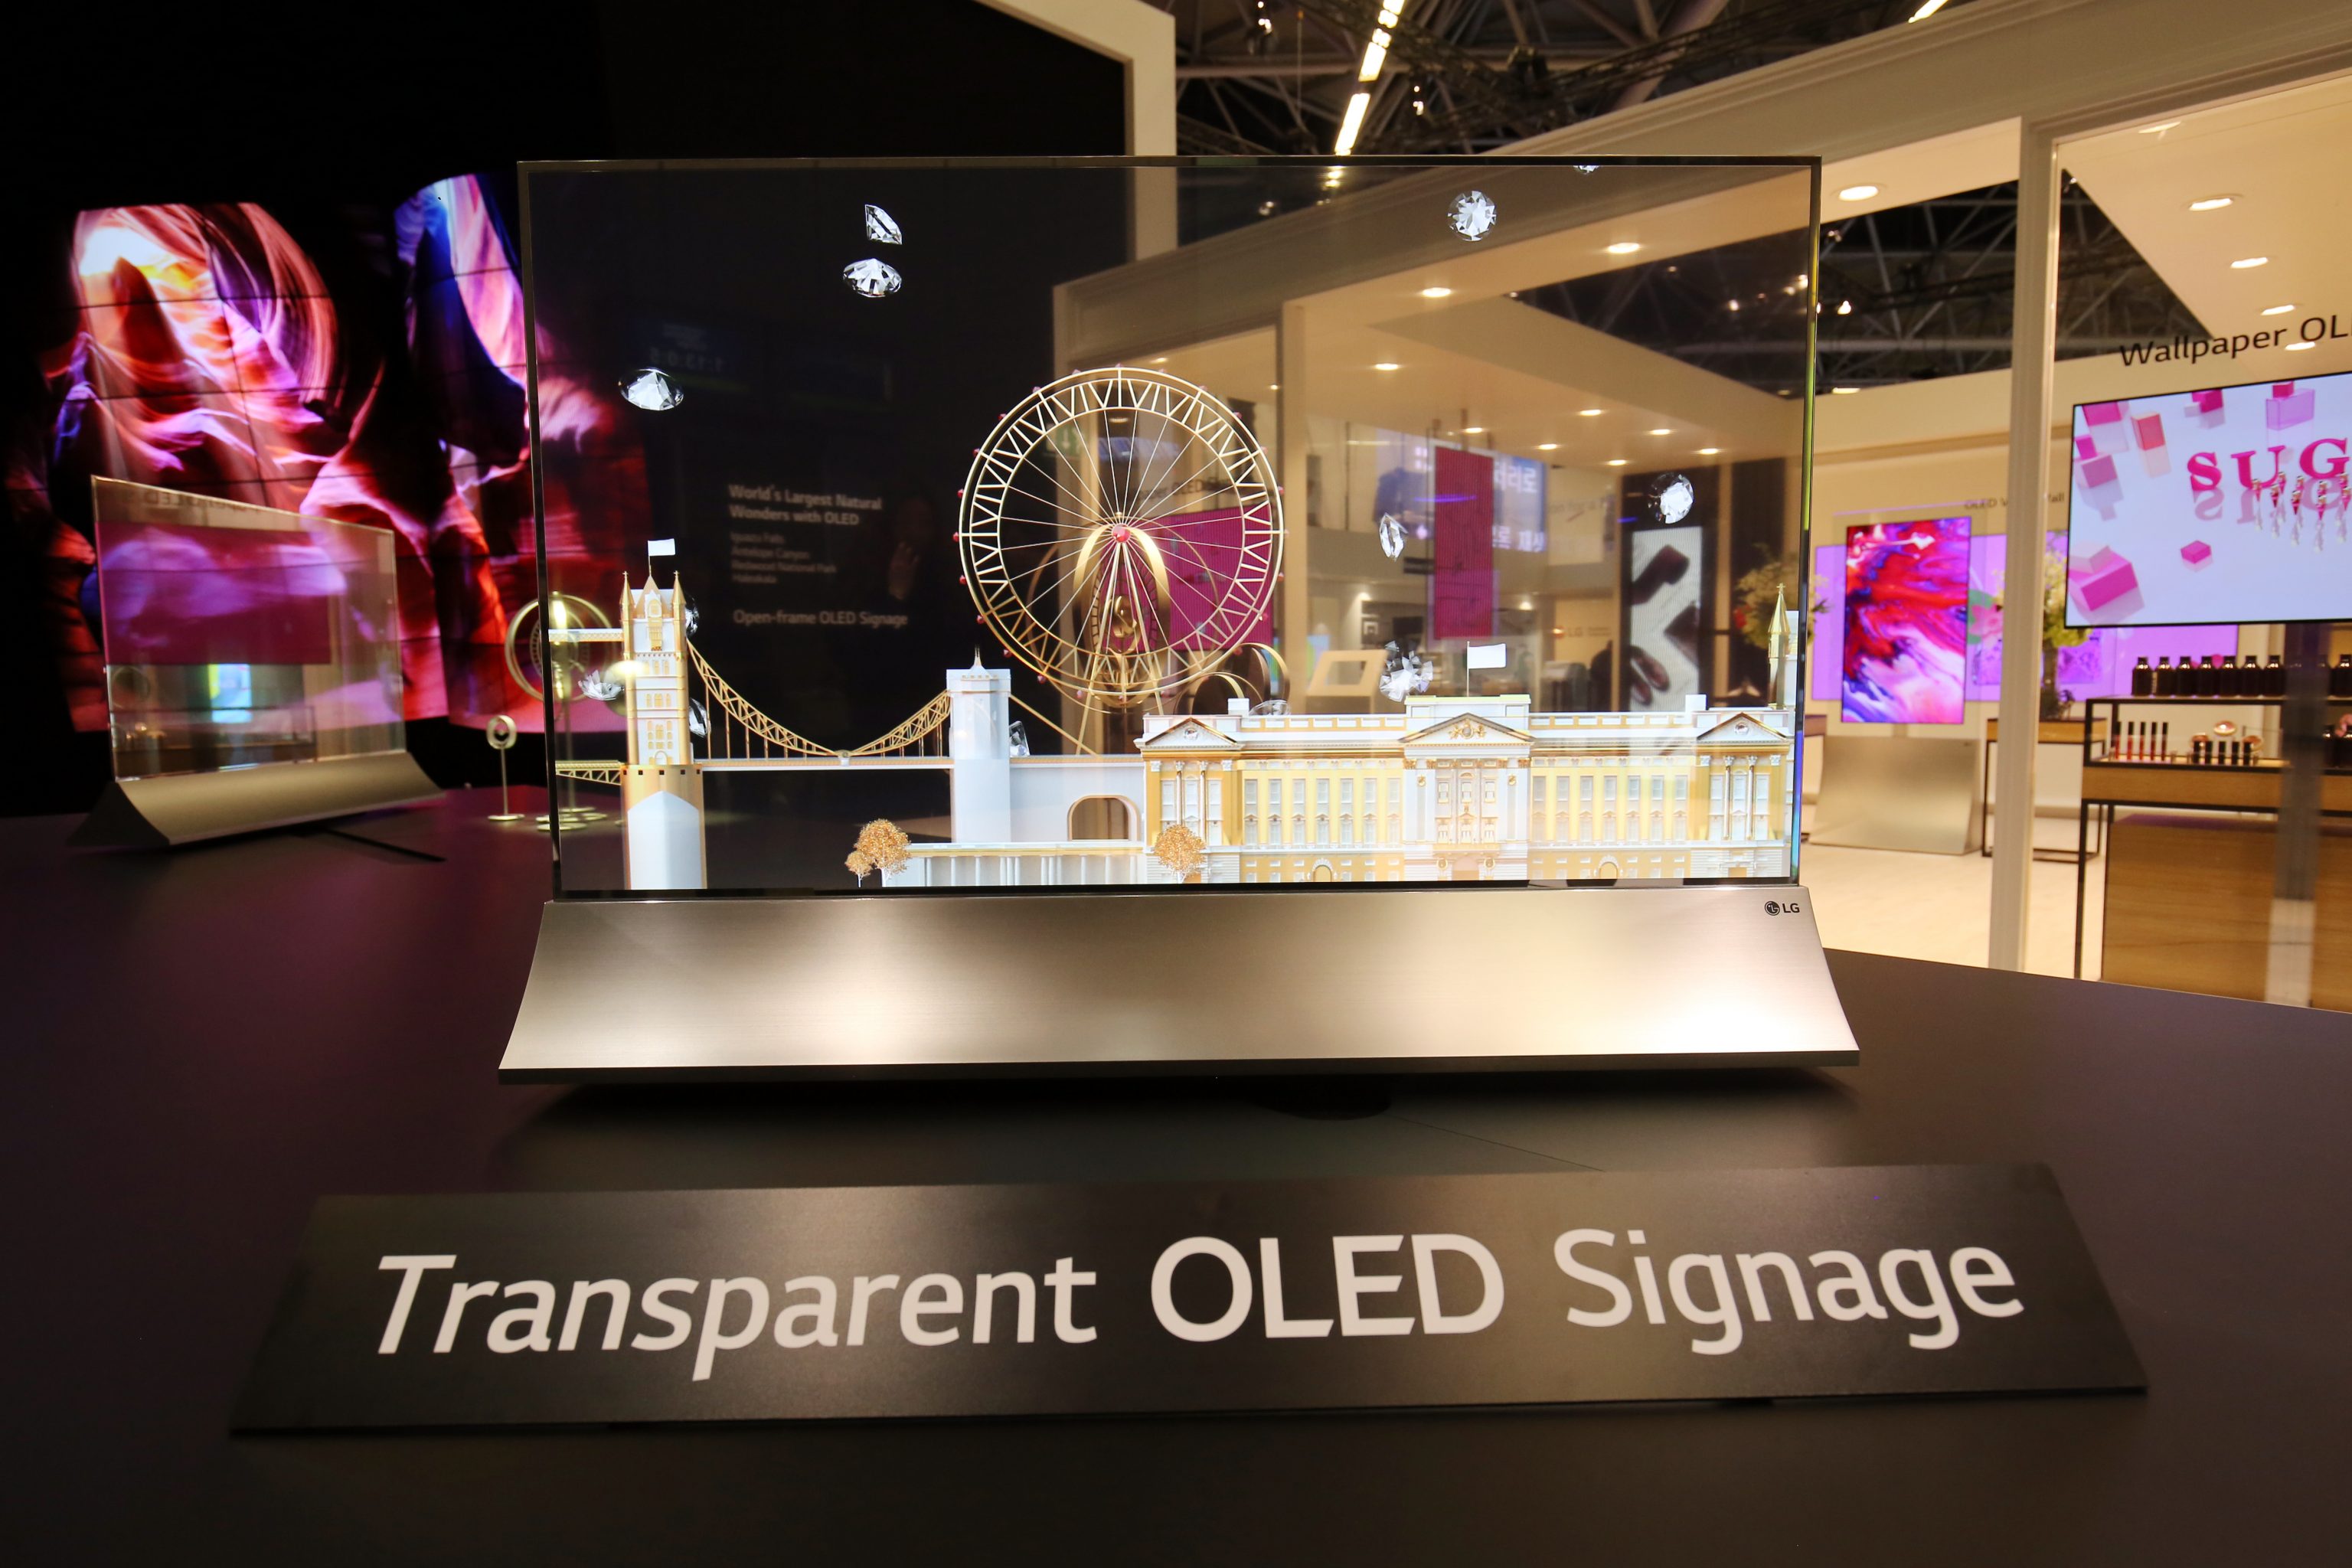 LG's new "beyond imagination" transparent 55" OLED display